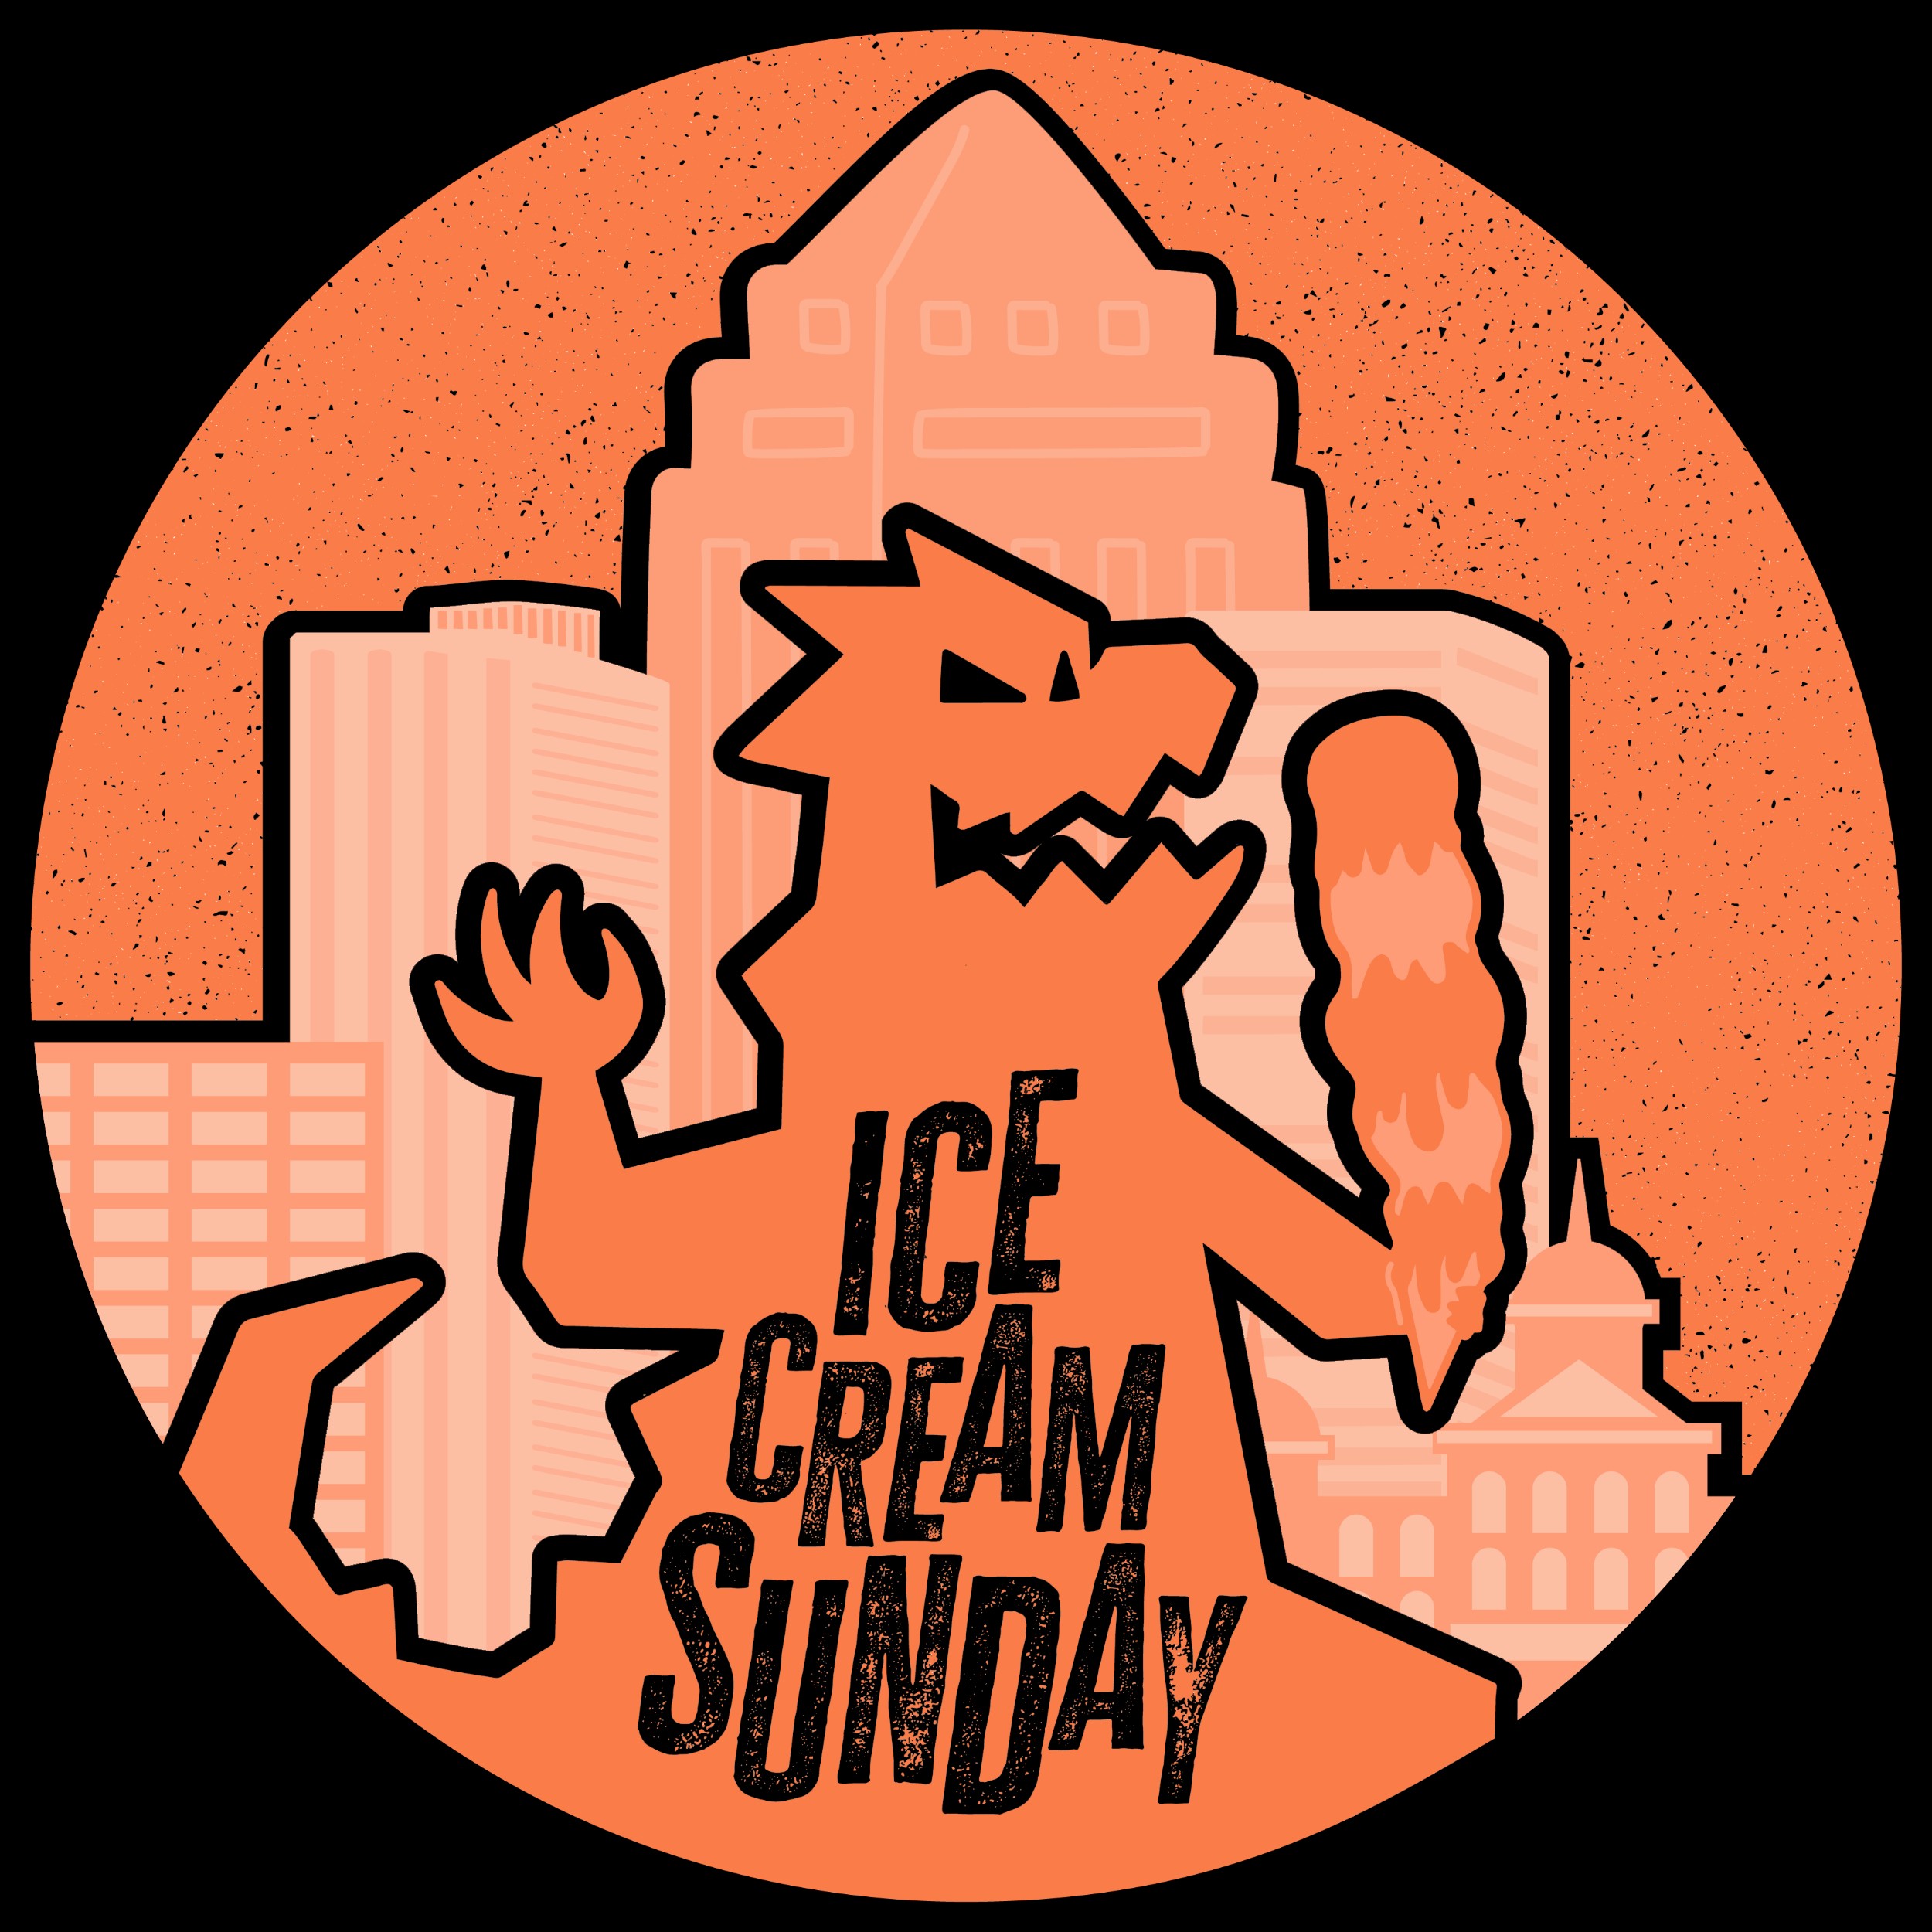 Ice Cream Sunday